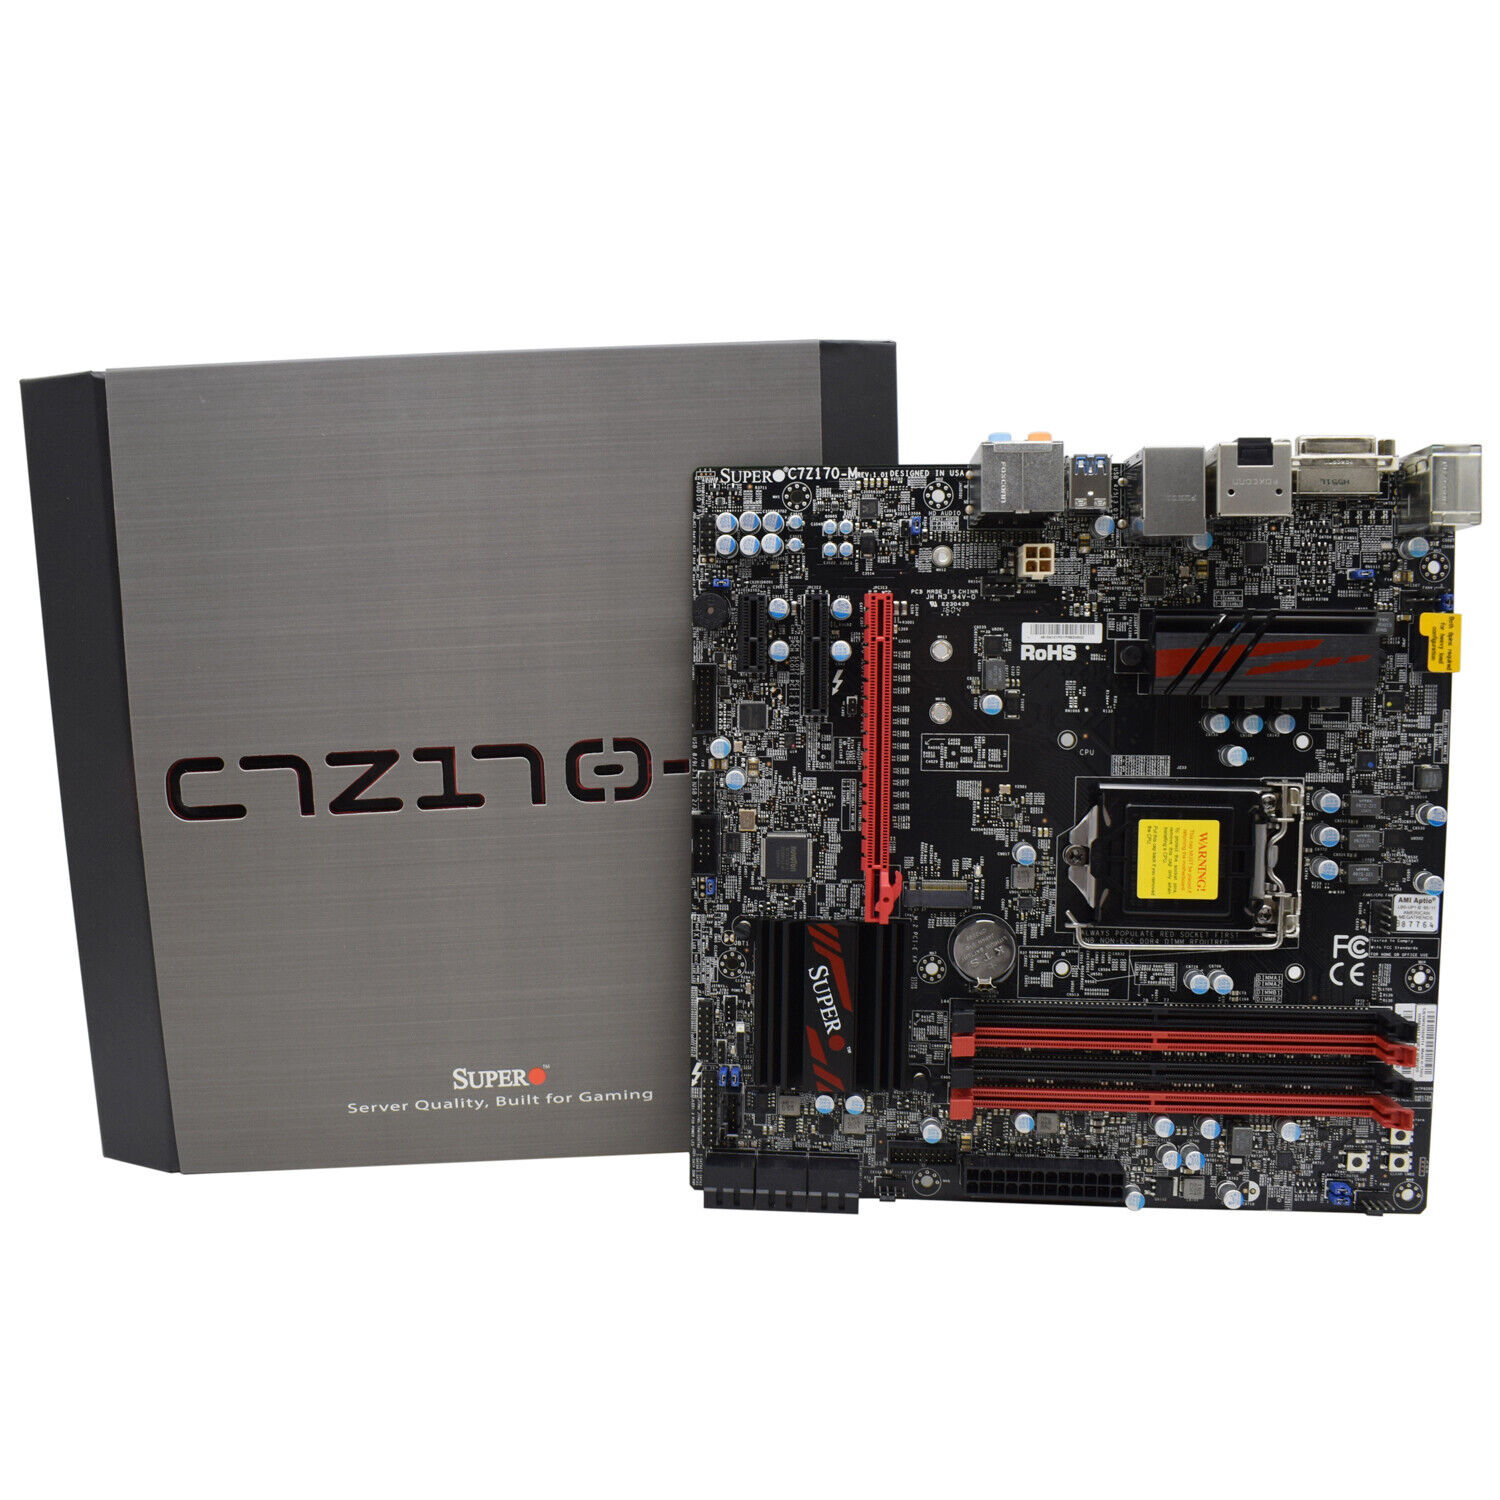 Supermicro C7Z170-M Motherboard M-ATX Intel Z170 LGA1151 DDR4 64GB HDMI DP+Box